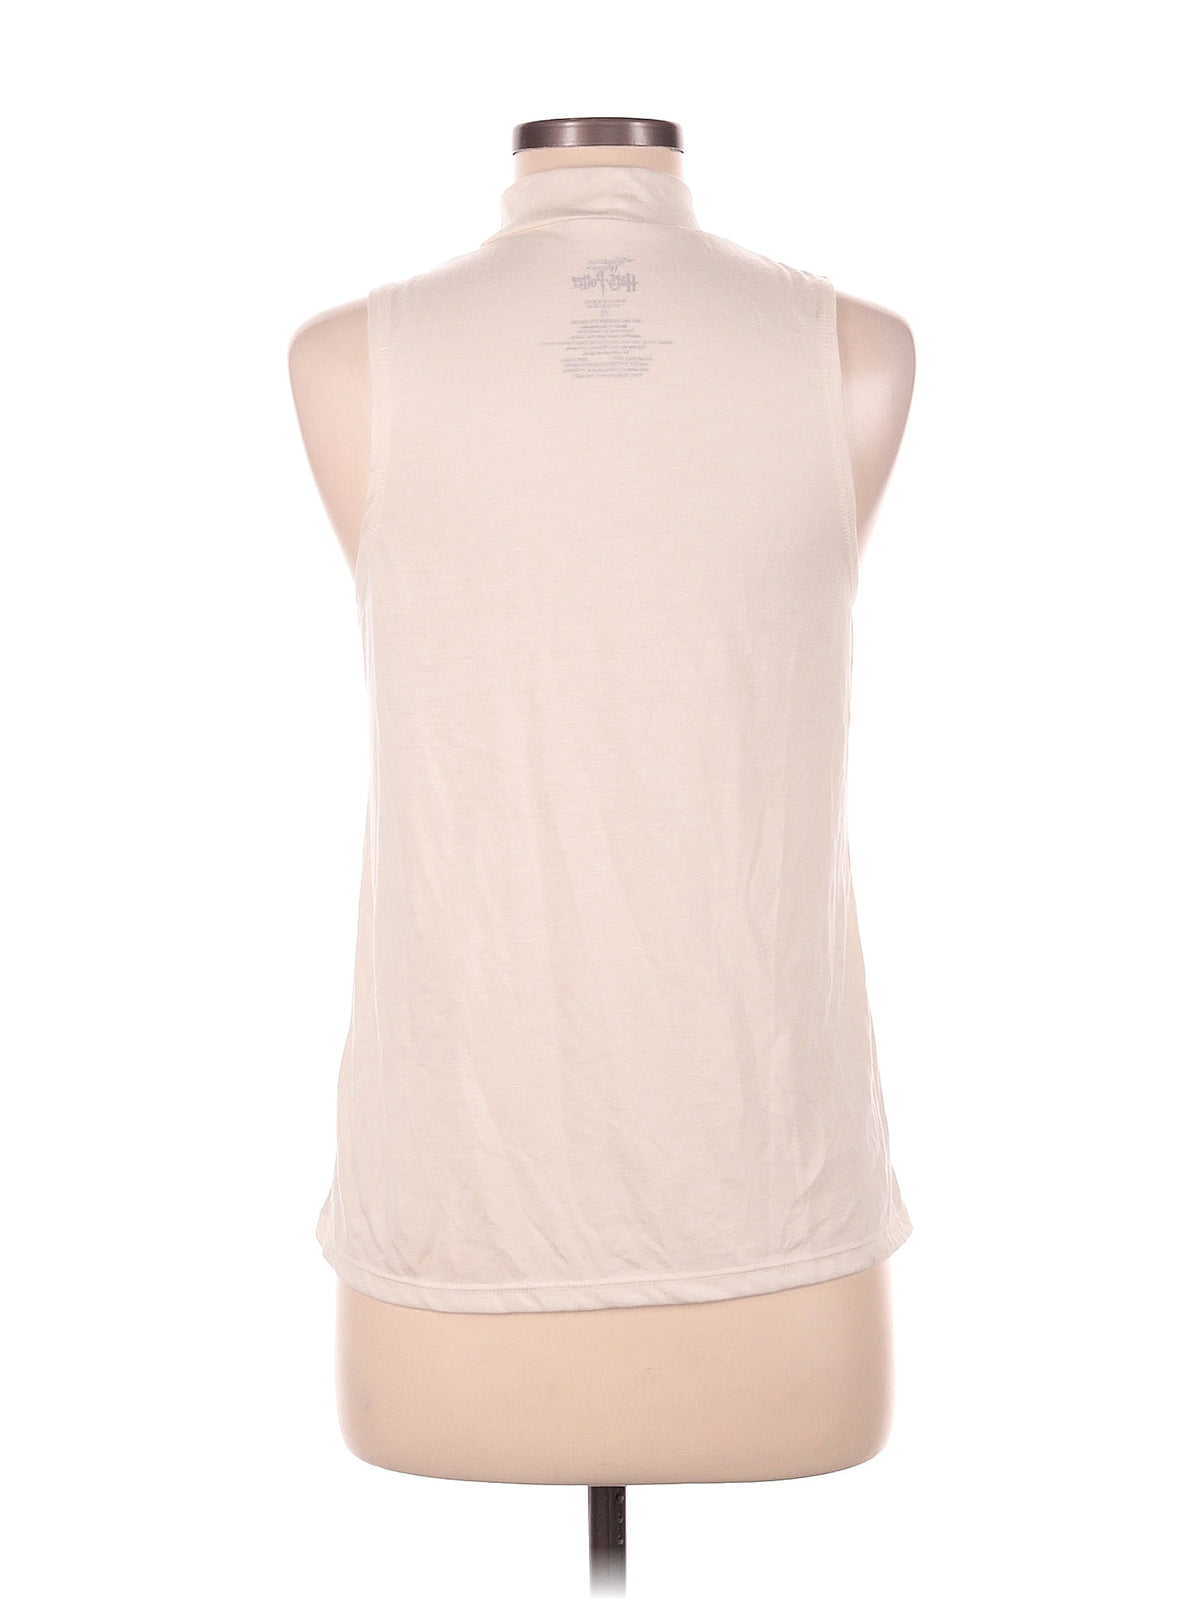 Sleeveless T Shirt size - M